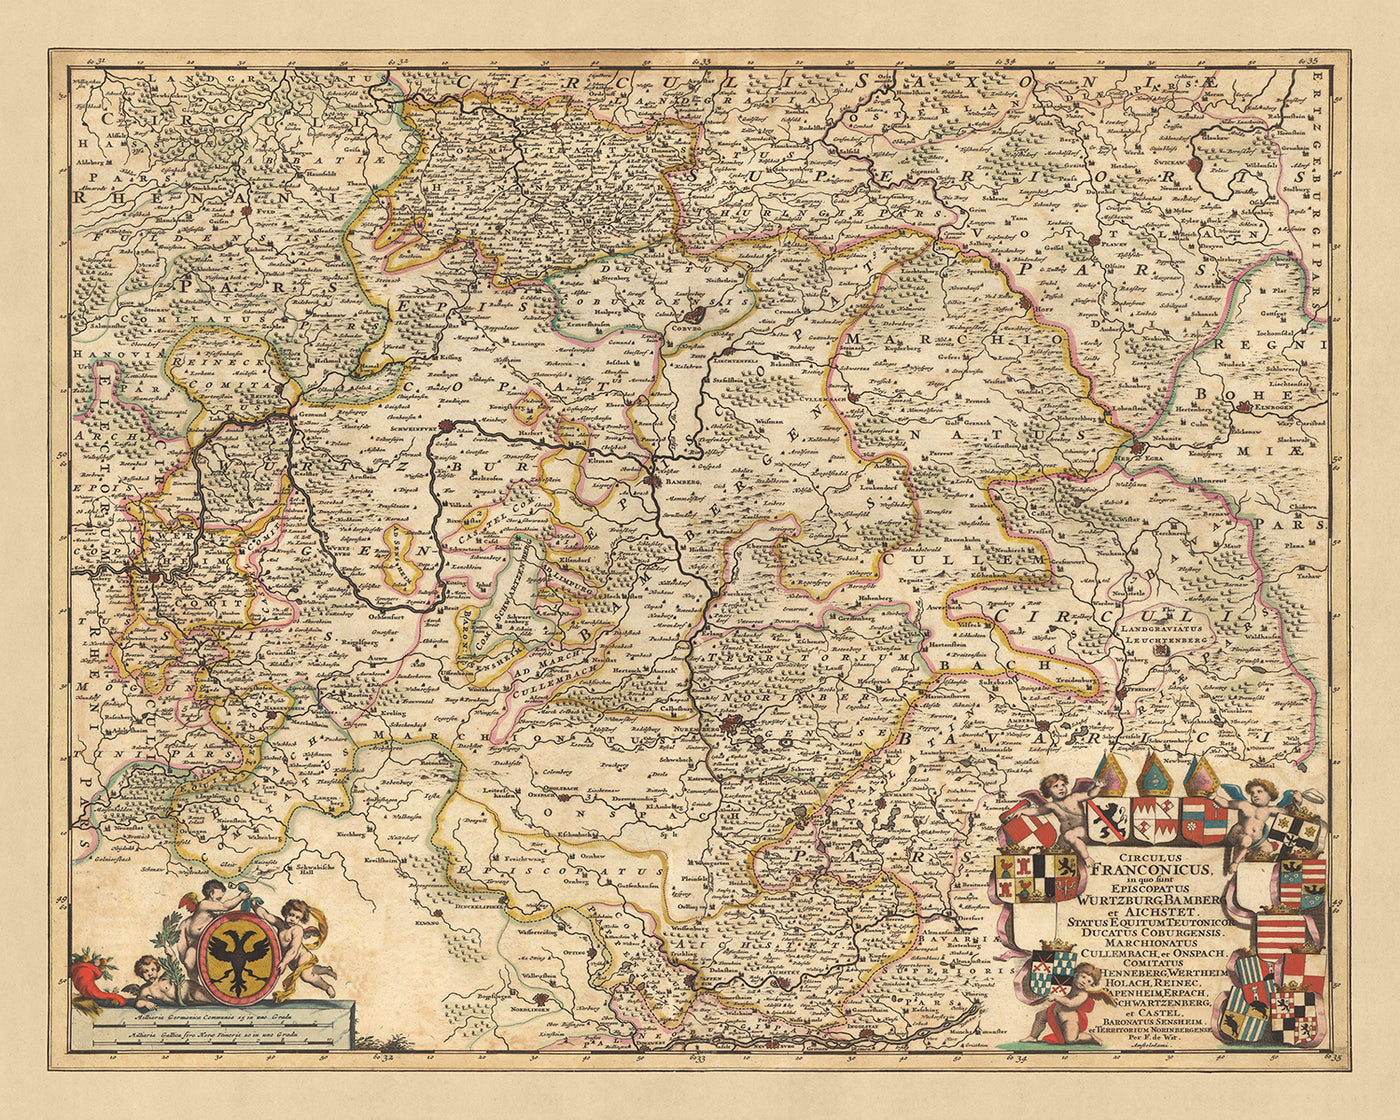 Ancienne carte du cercle franconien par Nicolaes Visscher II, 1690 : Nuremberg, Ingolstadt, Würzburg, Zwickaw, forêt de Slavkov